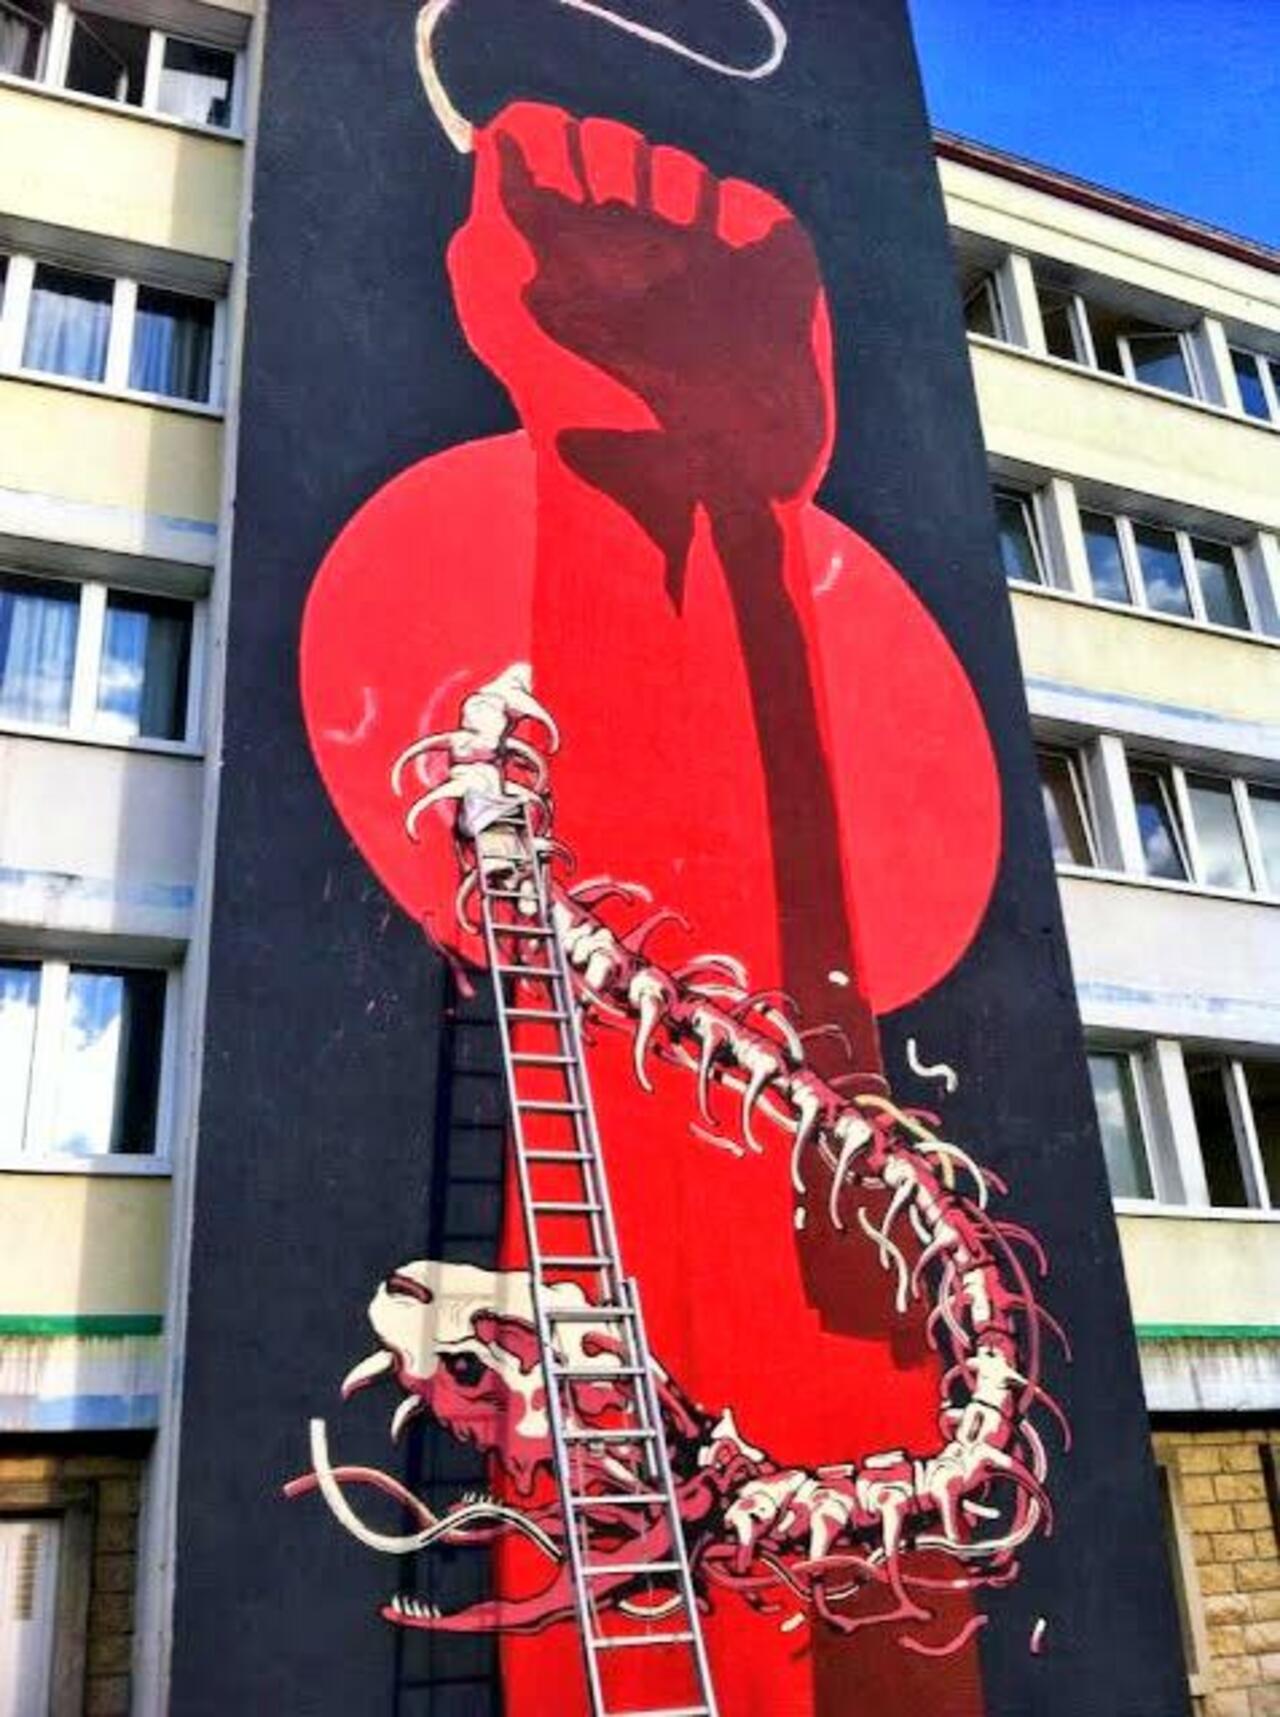 Smithe & Seher
Besancon, France
#streetart #art #graffiti #mural http://t.co/h3acuY6fno